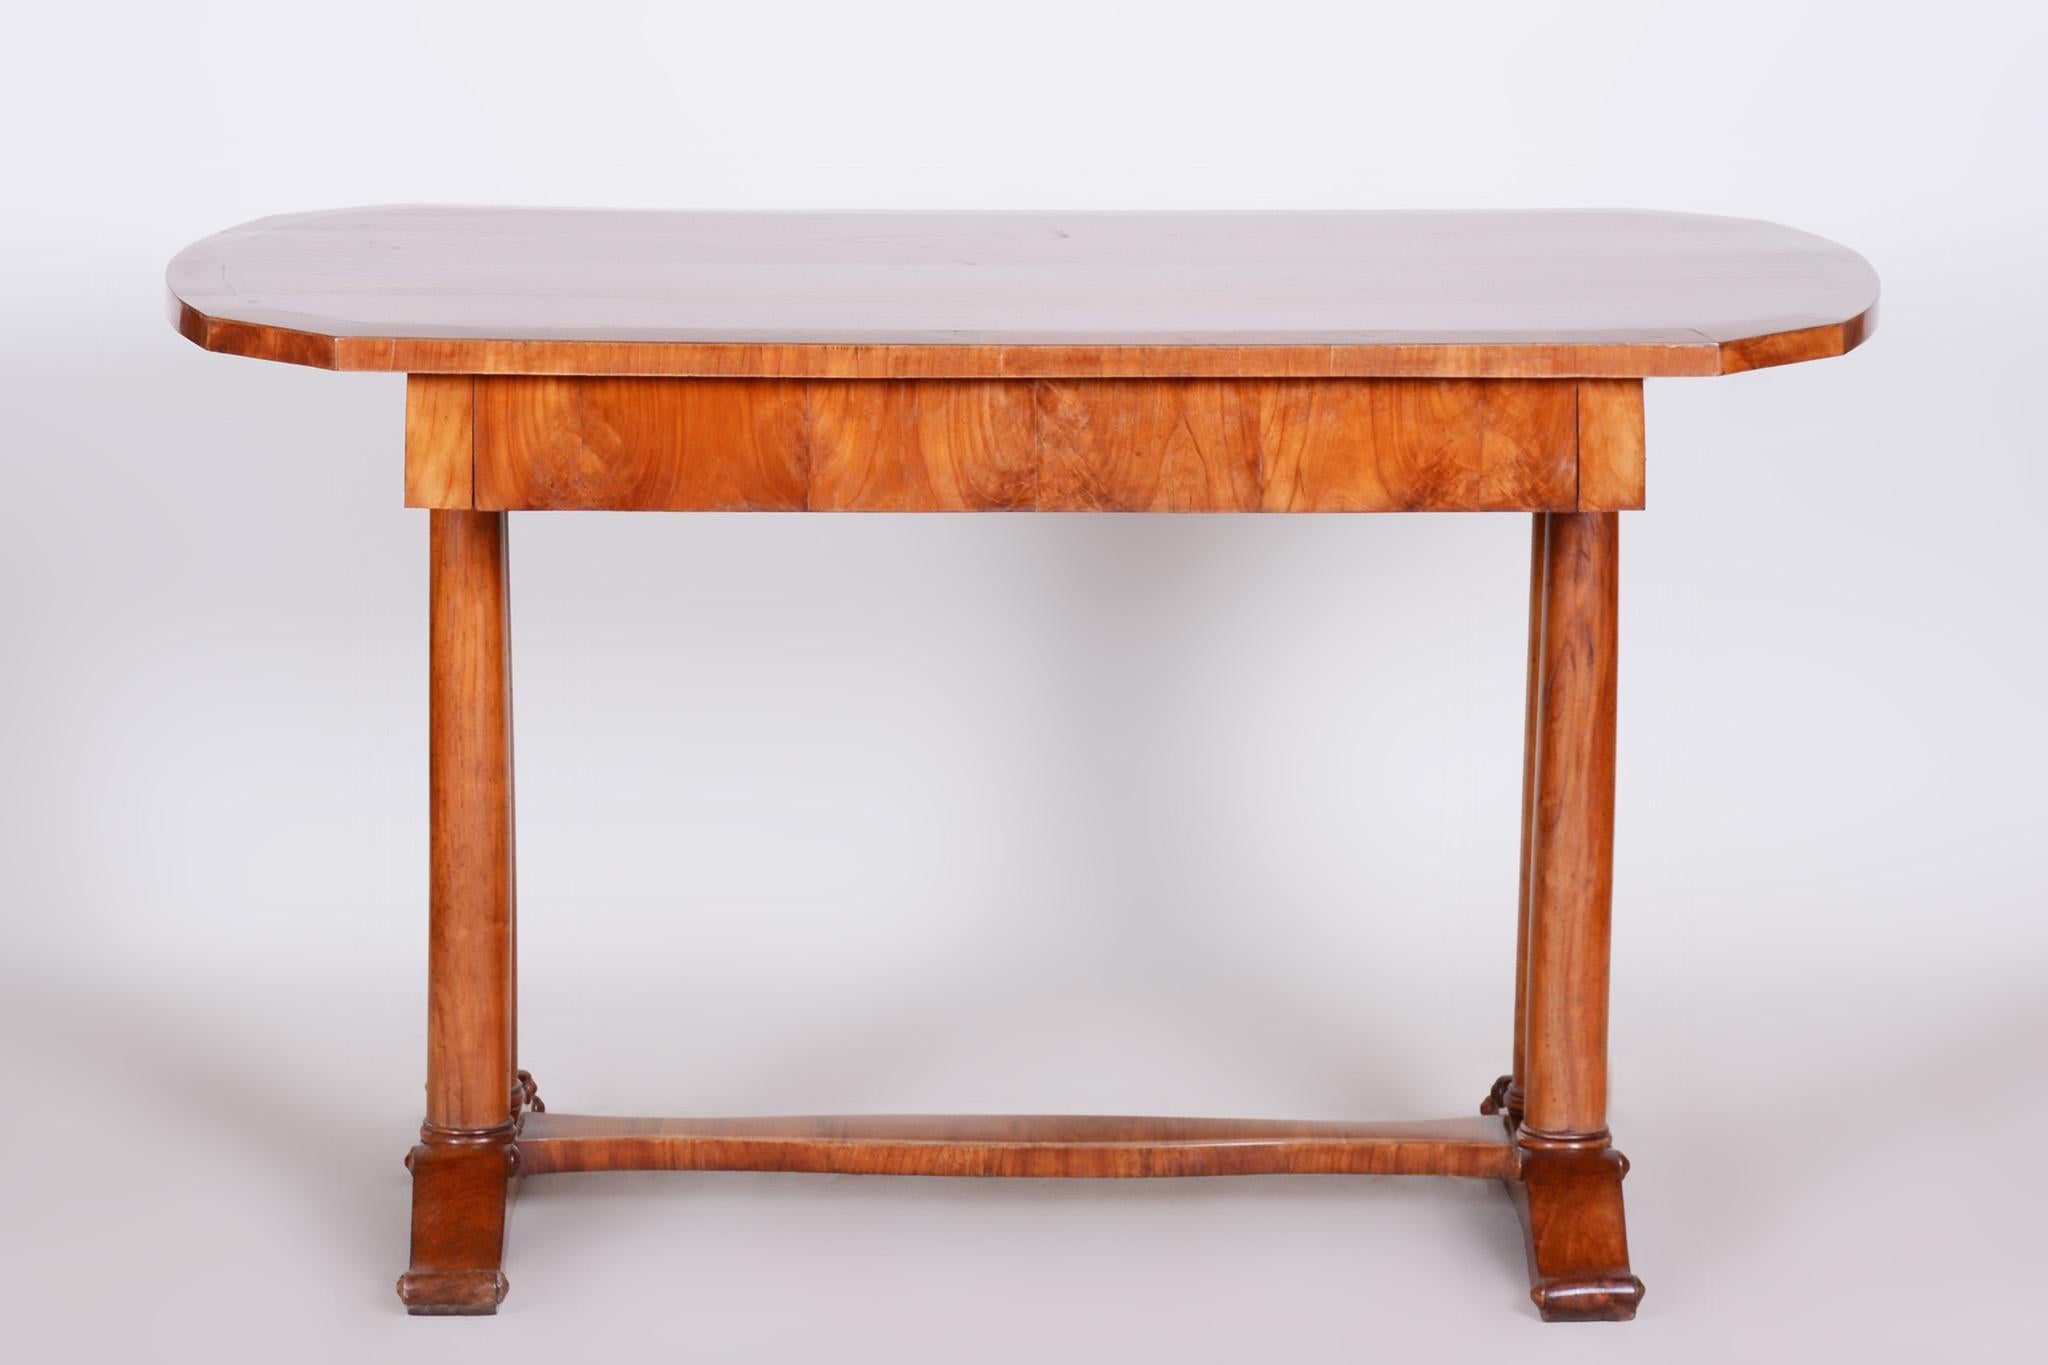 Biedermeier writing desk
Completely restored.
Shellac polish.
Material: Maple
Source: Austria
Period: 1830-1839.